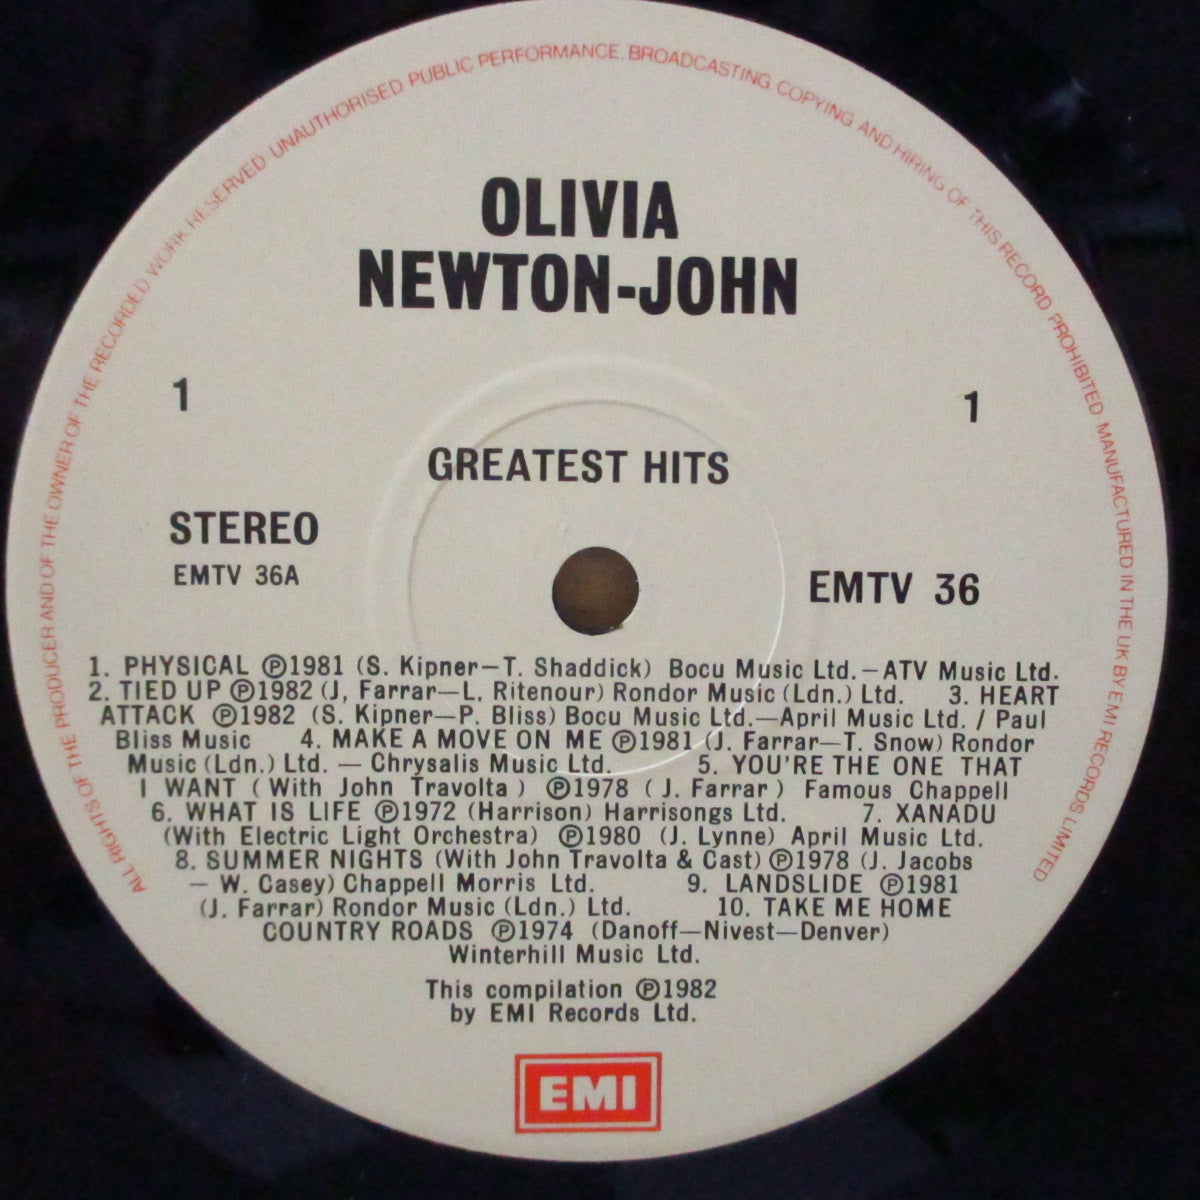 OLIVIA NEWTON JOHN (オリビア・ニュートン＝ジョン) - Greatest Hits (UK オリジナル LP)